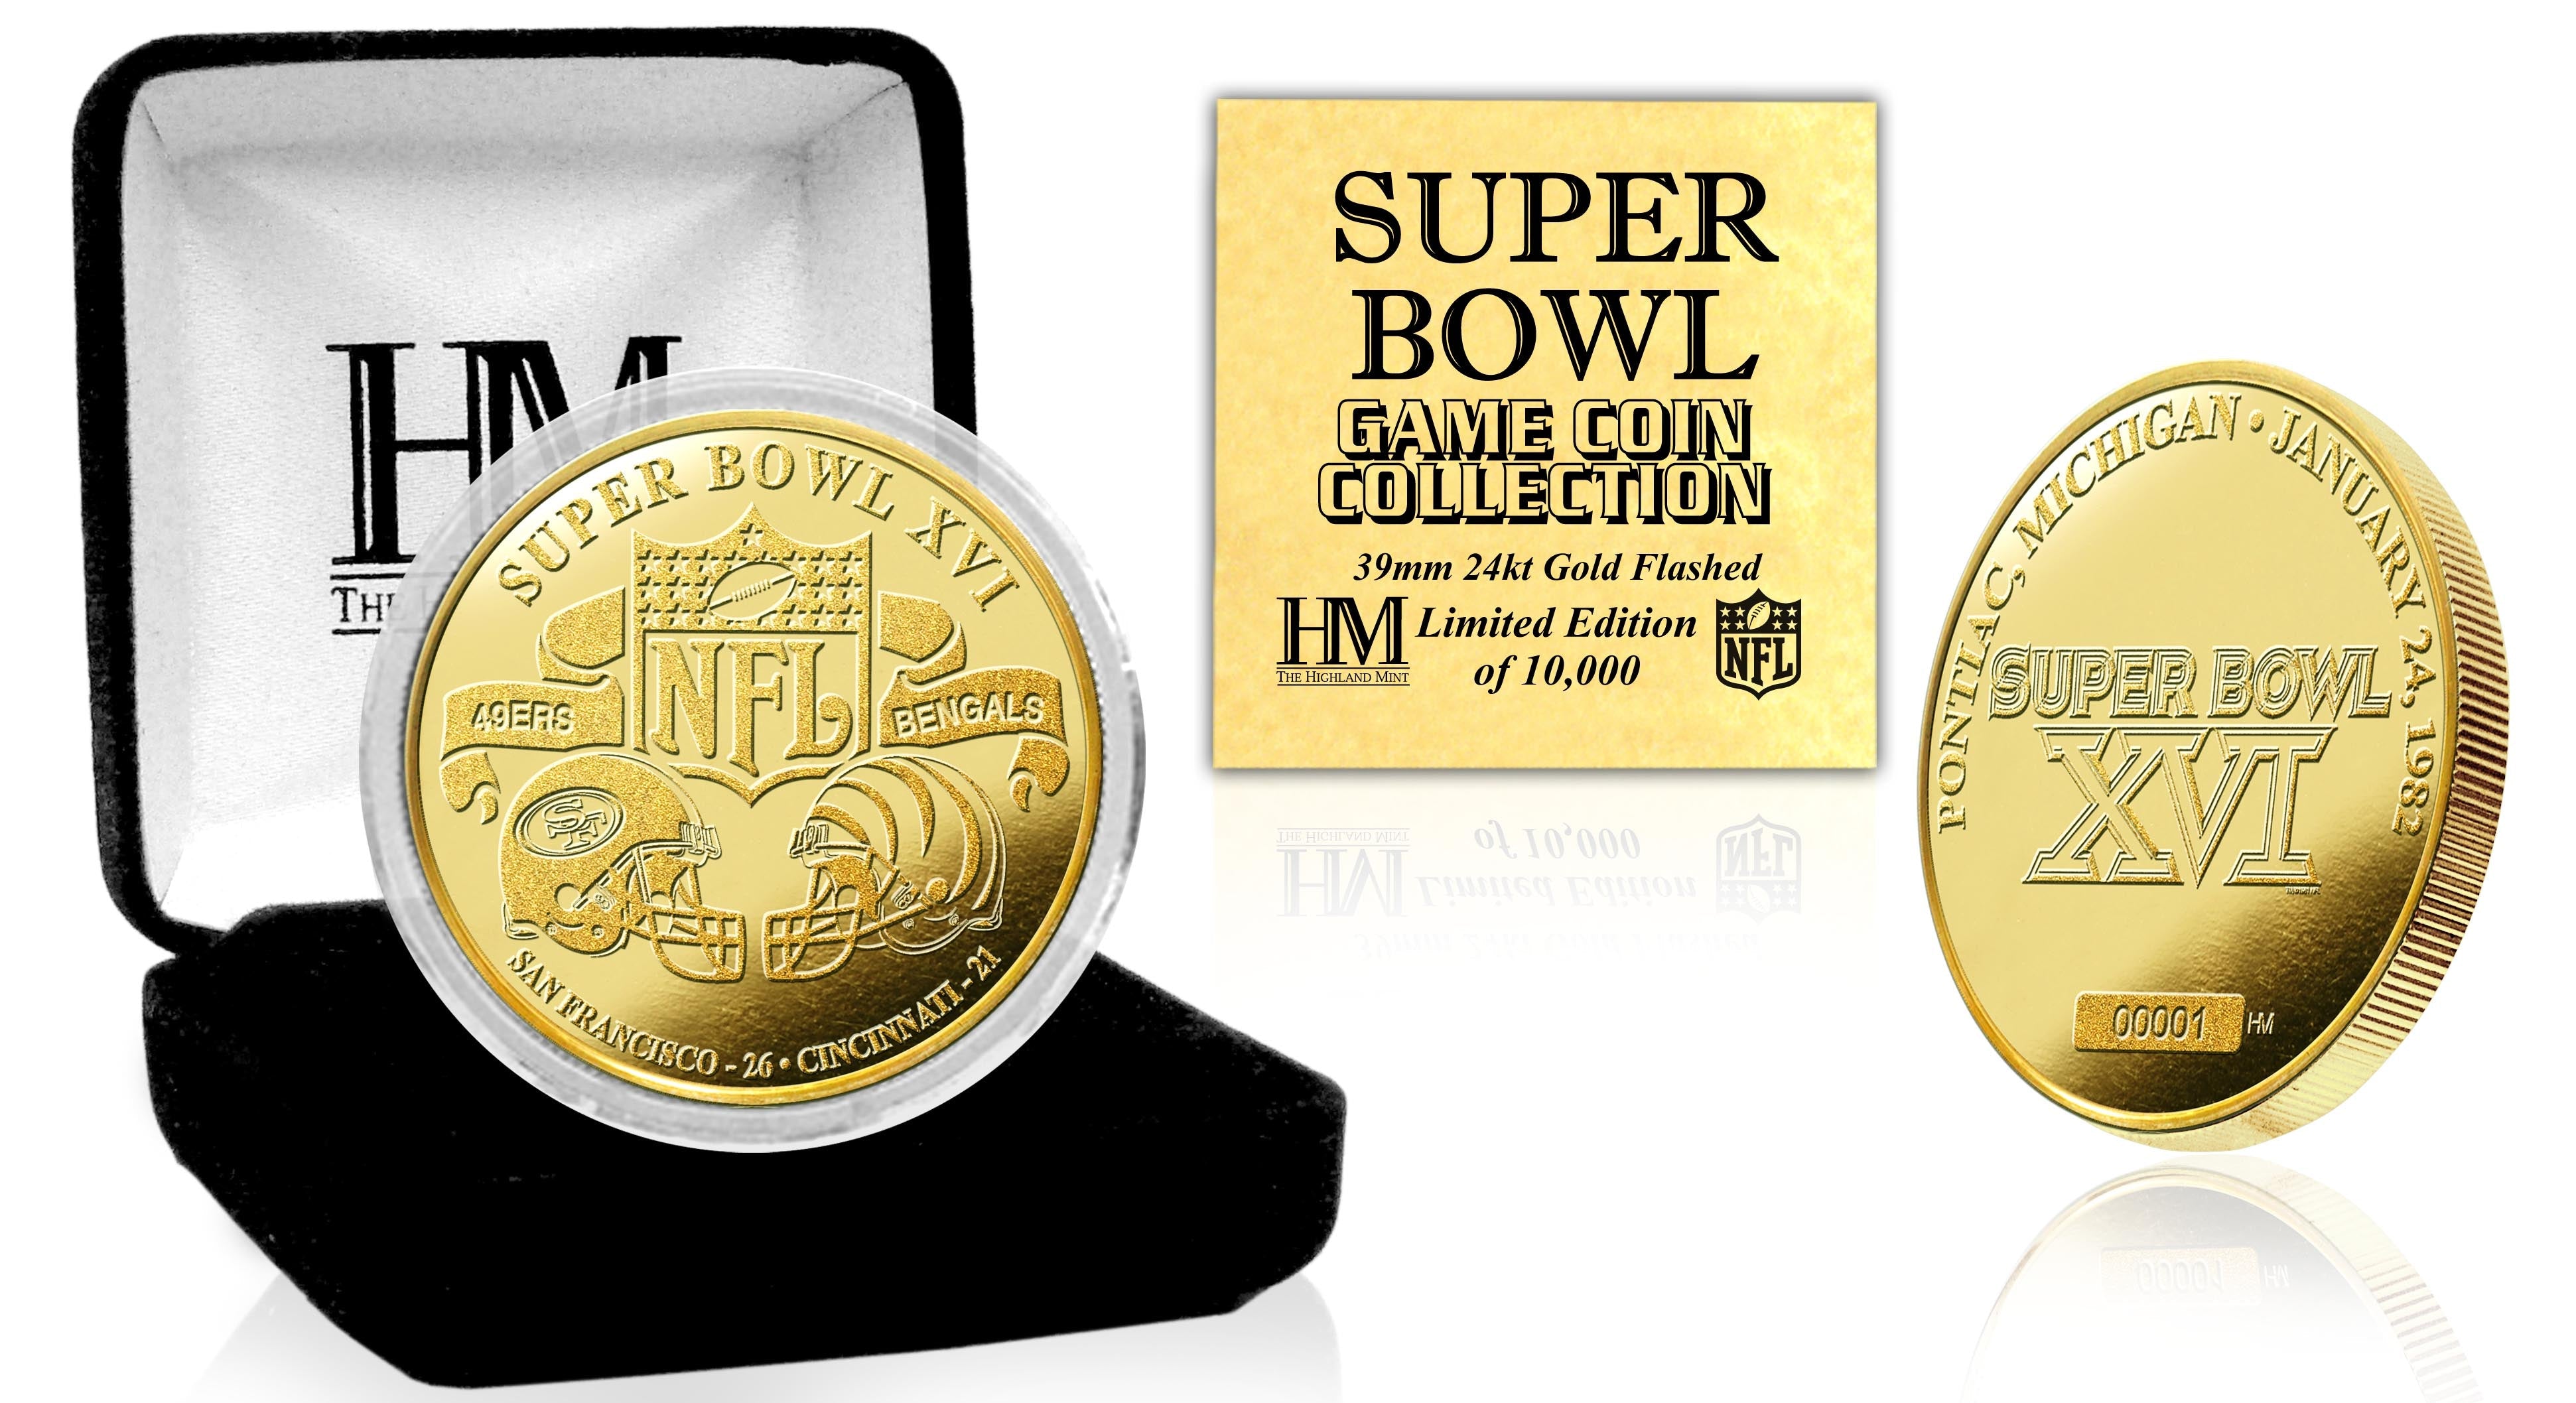 Super Bowl XVI 24kt Gold Flip Coin